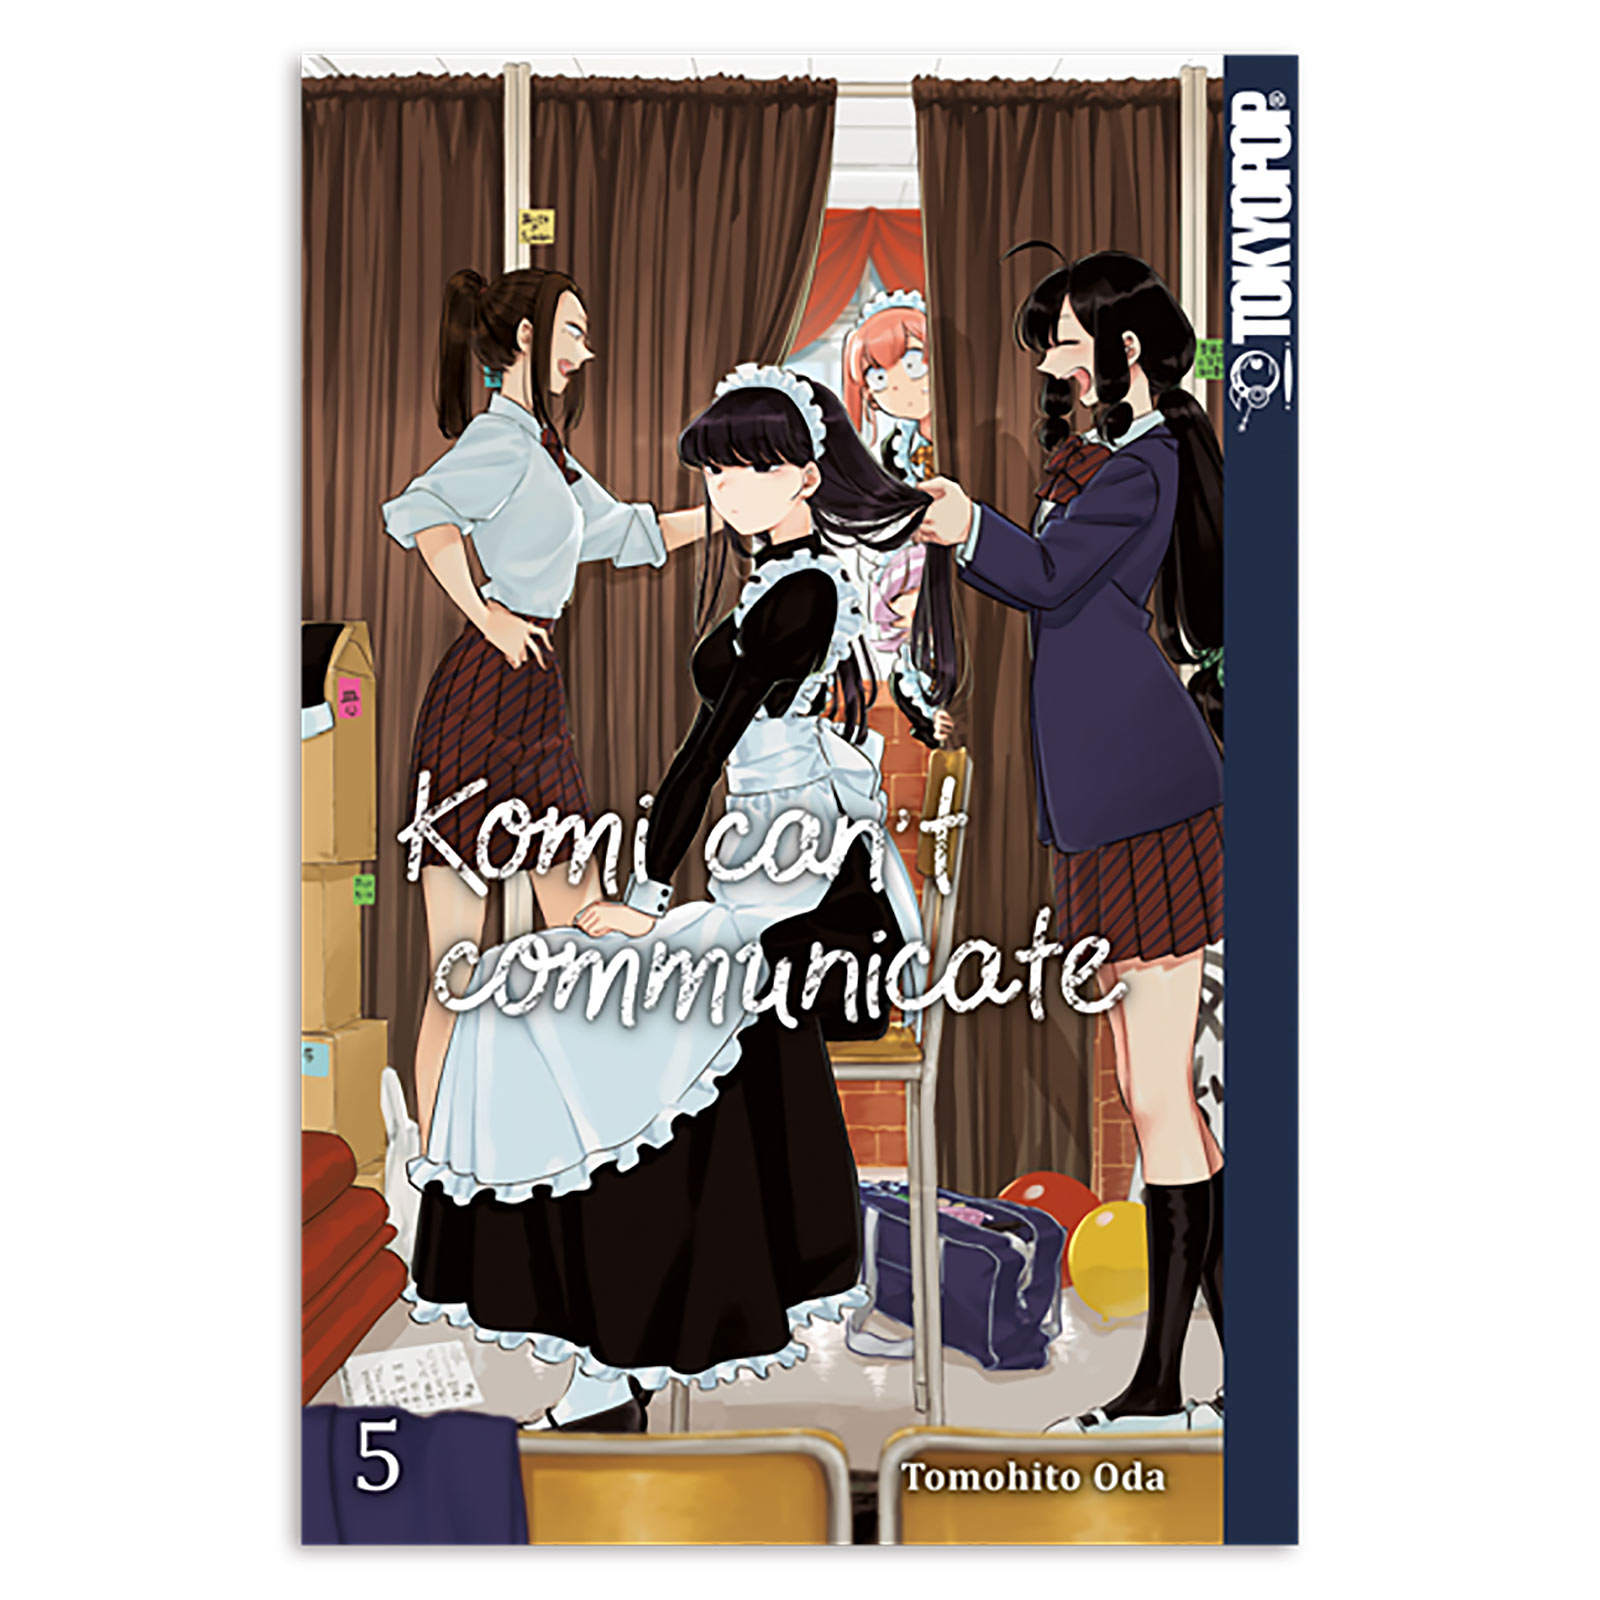 Komi can't communicate - Band 5 Taschenbuch